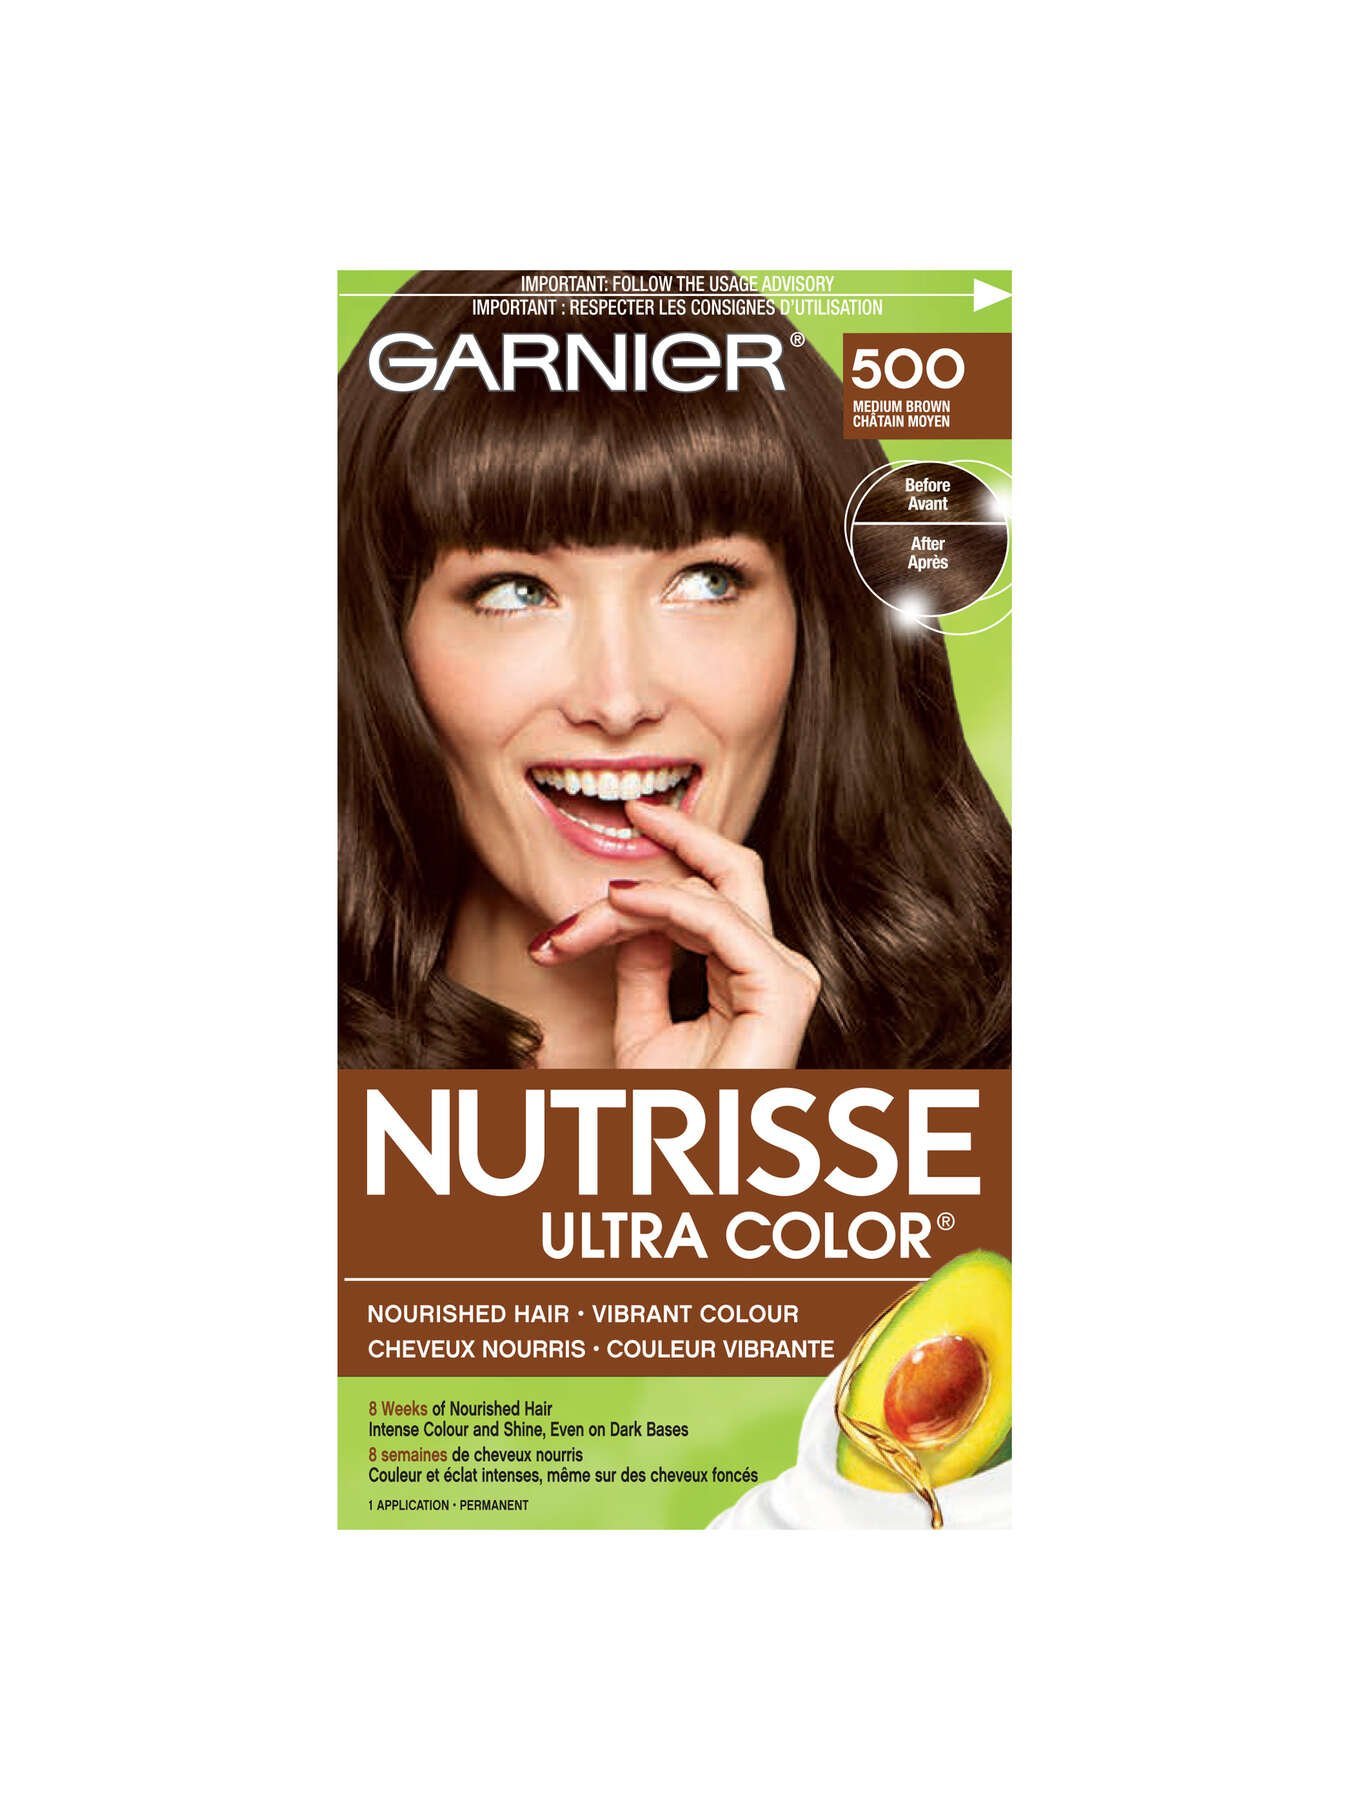 Nutrisse Ultra Coverage Hair Dye and Hair Color  Garnier